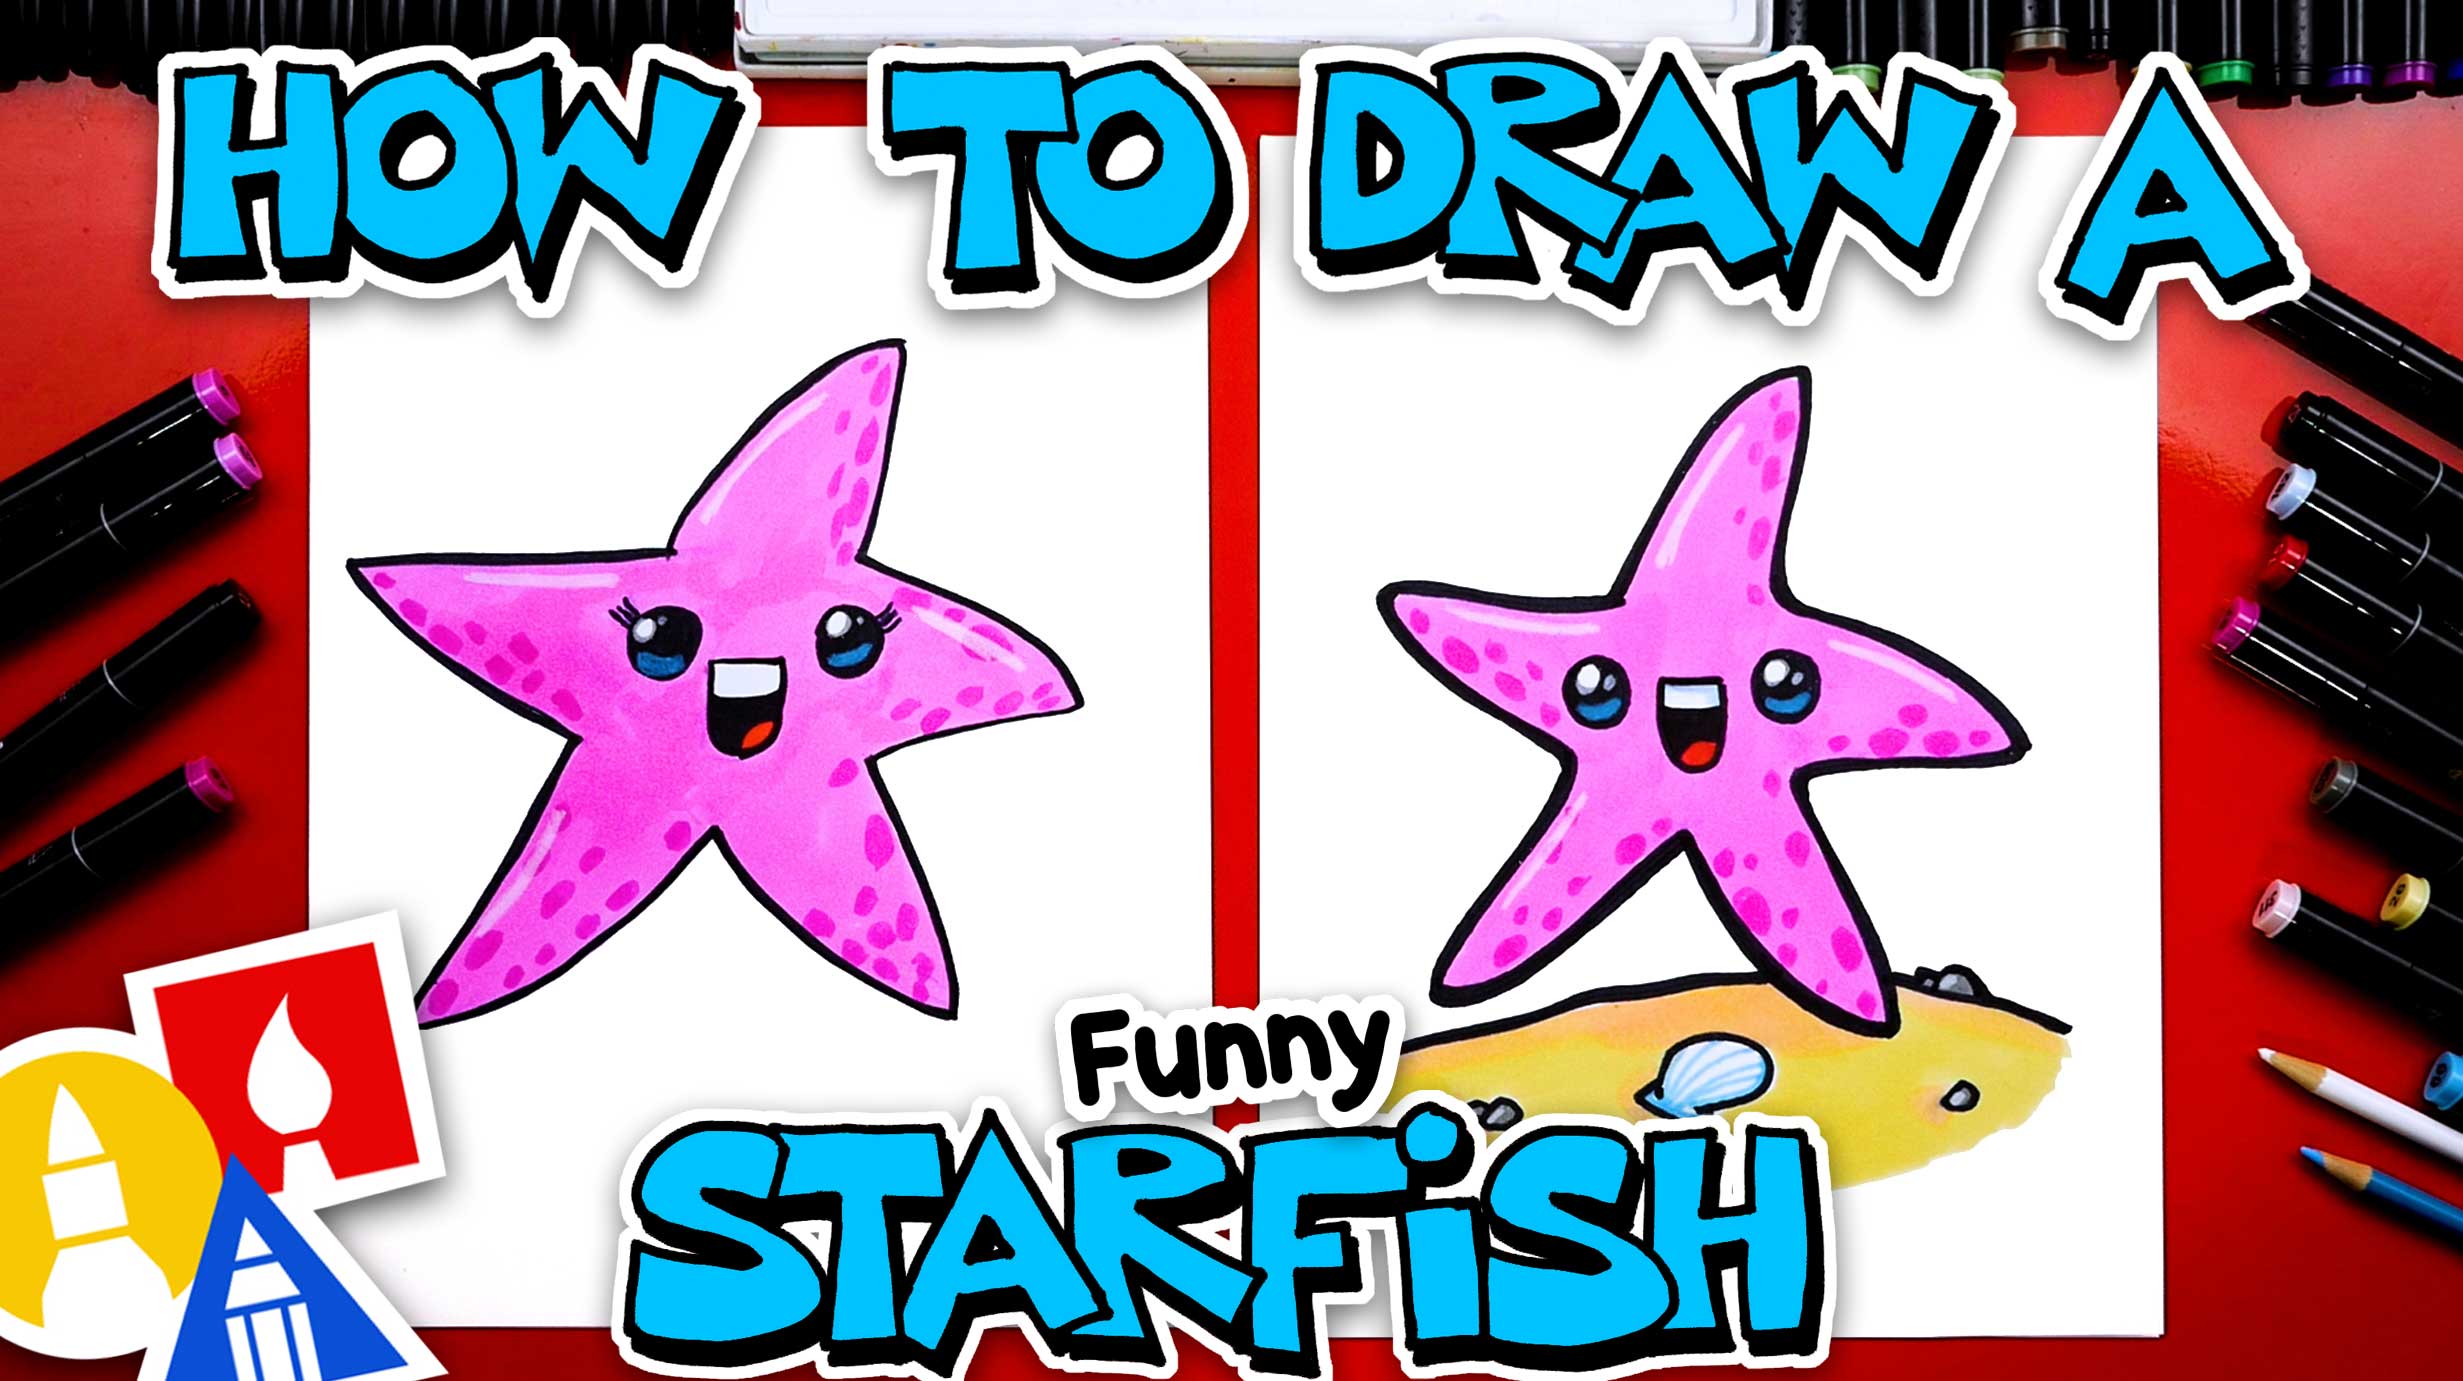 starfish drawing for kids